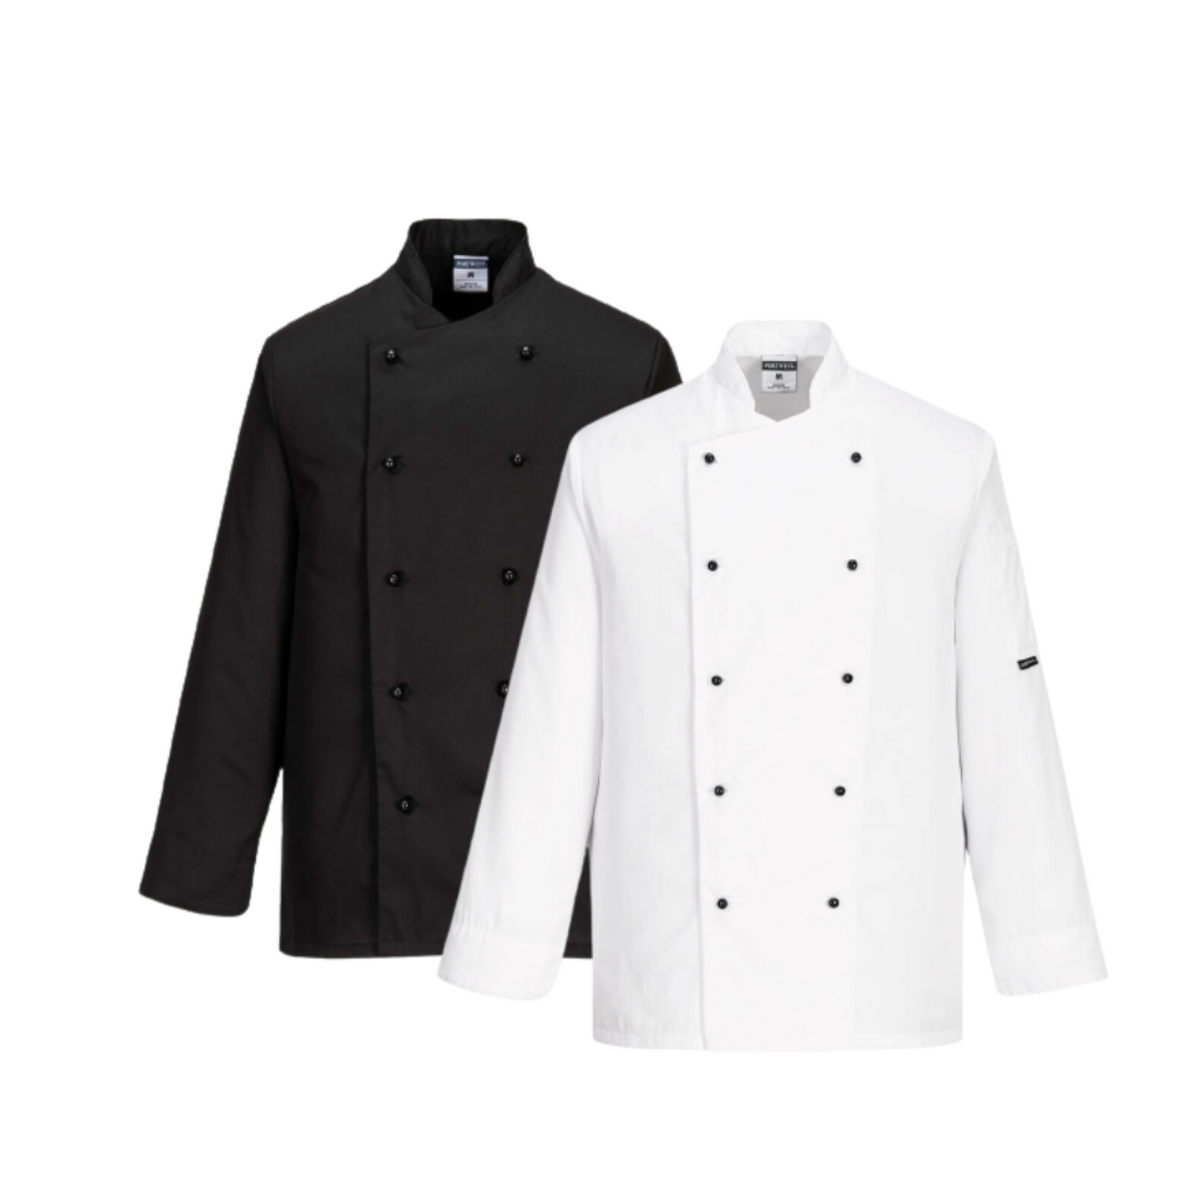 Portwest Somerset Chefs Jacket Mandarin Collar Reversible Front Jacket C834-Collins Clothing Co